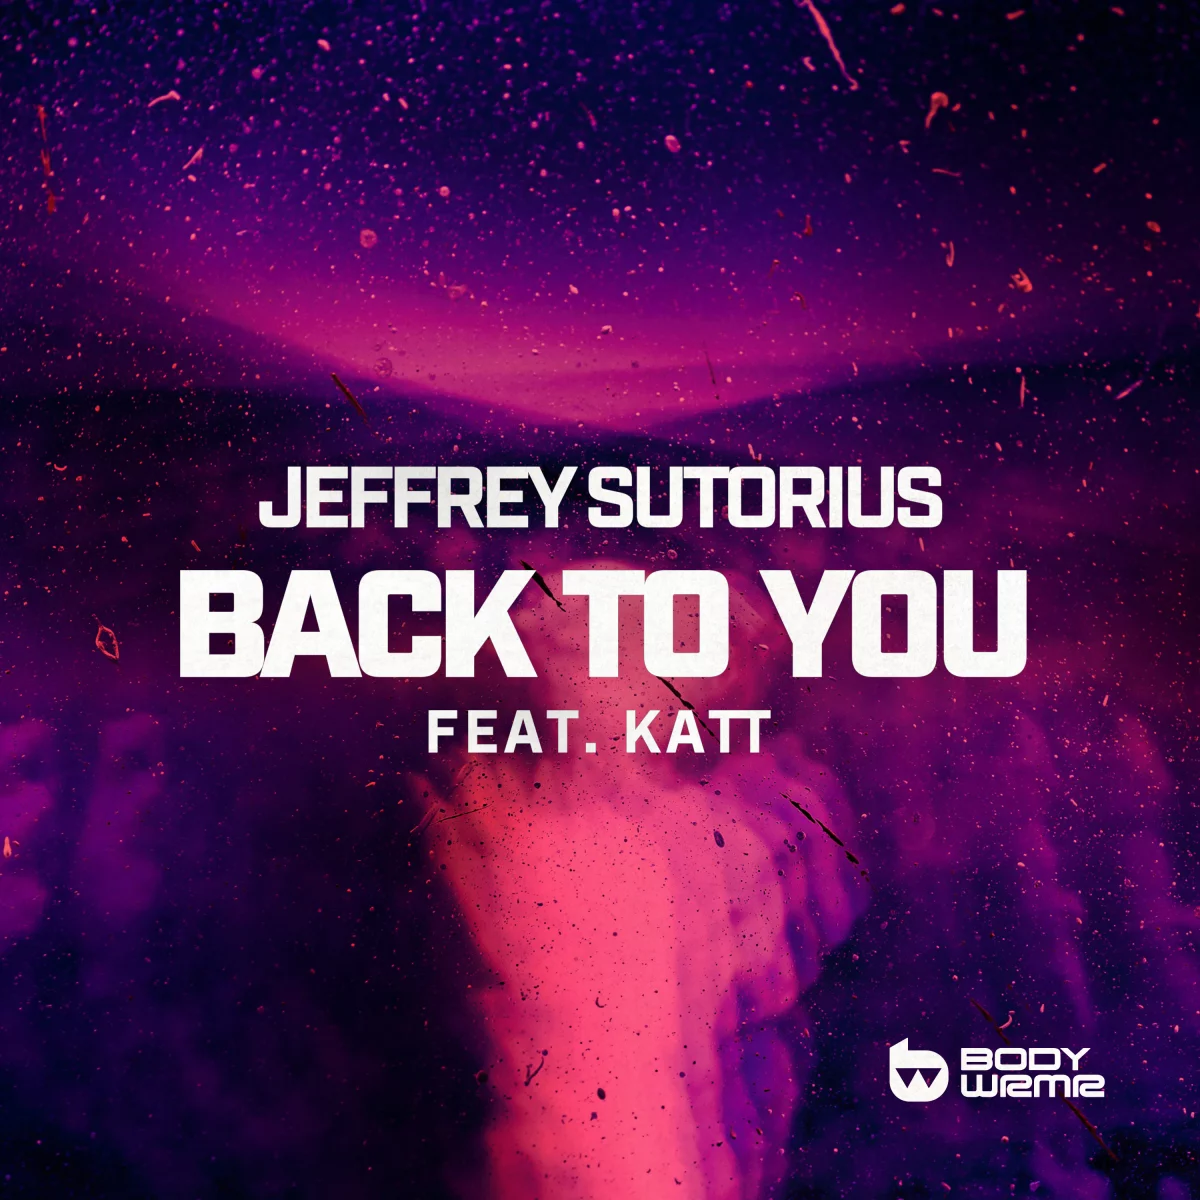 Back To You - Jeffrey Sutorius⁠ feat. KATT⁠ 